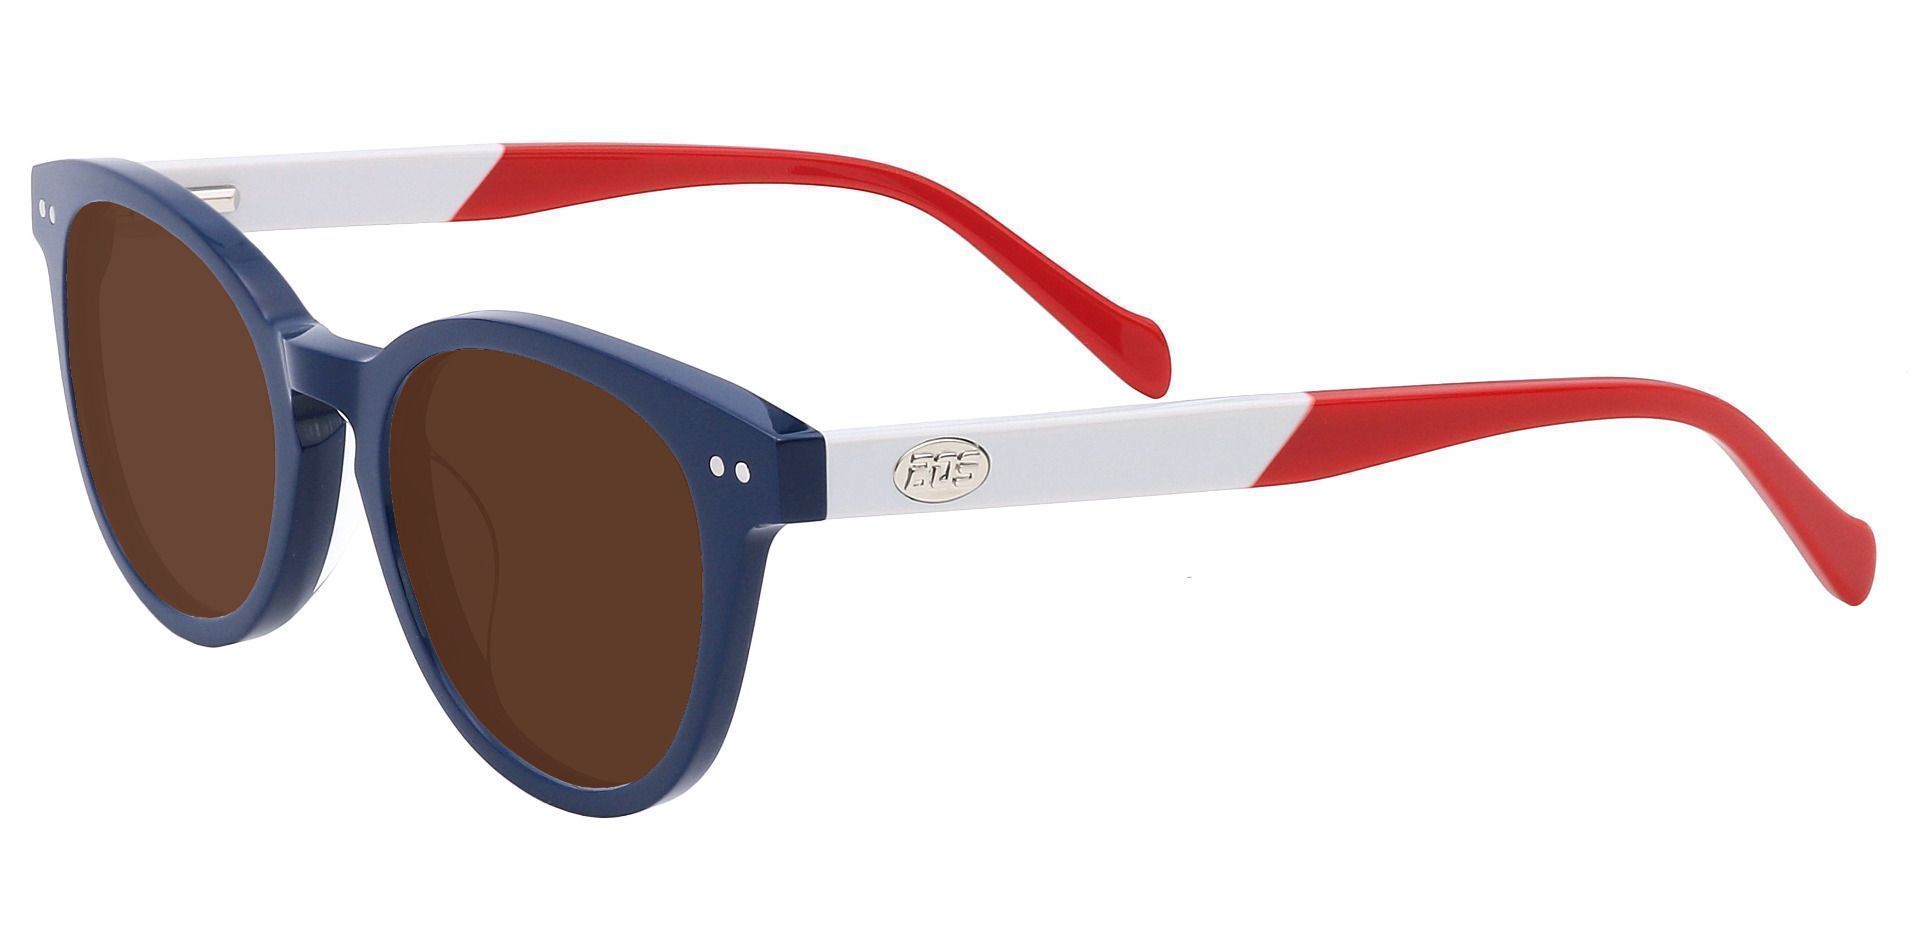 Common Oval Progressive Sunglasses - Blue Frame With Brown Lenses